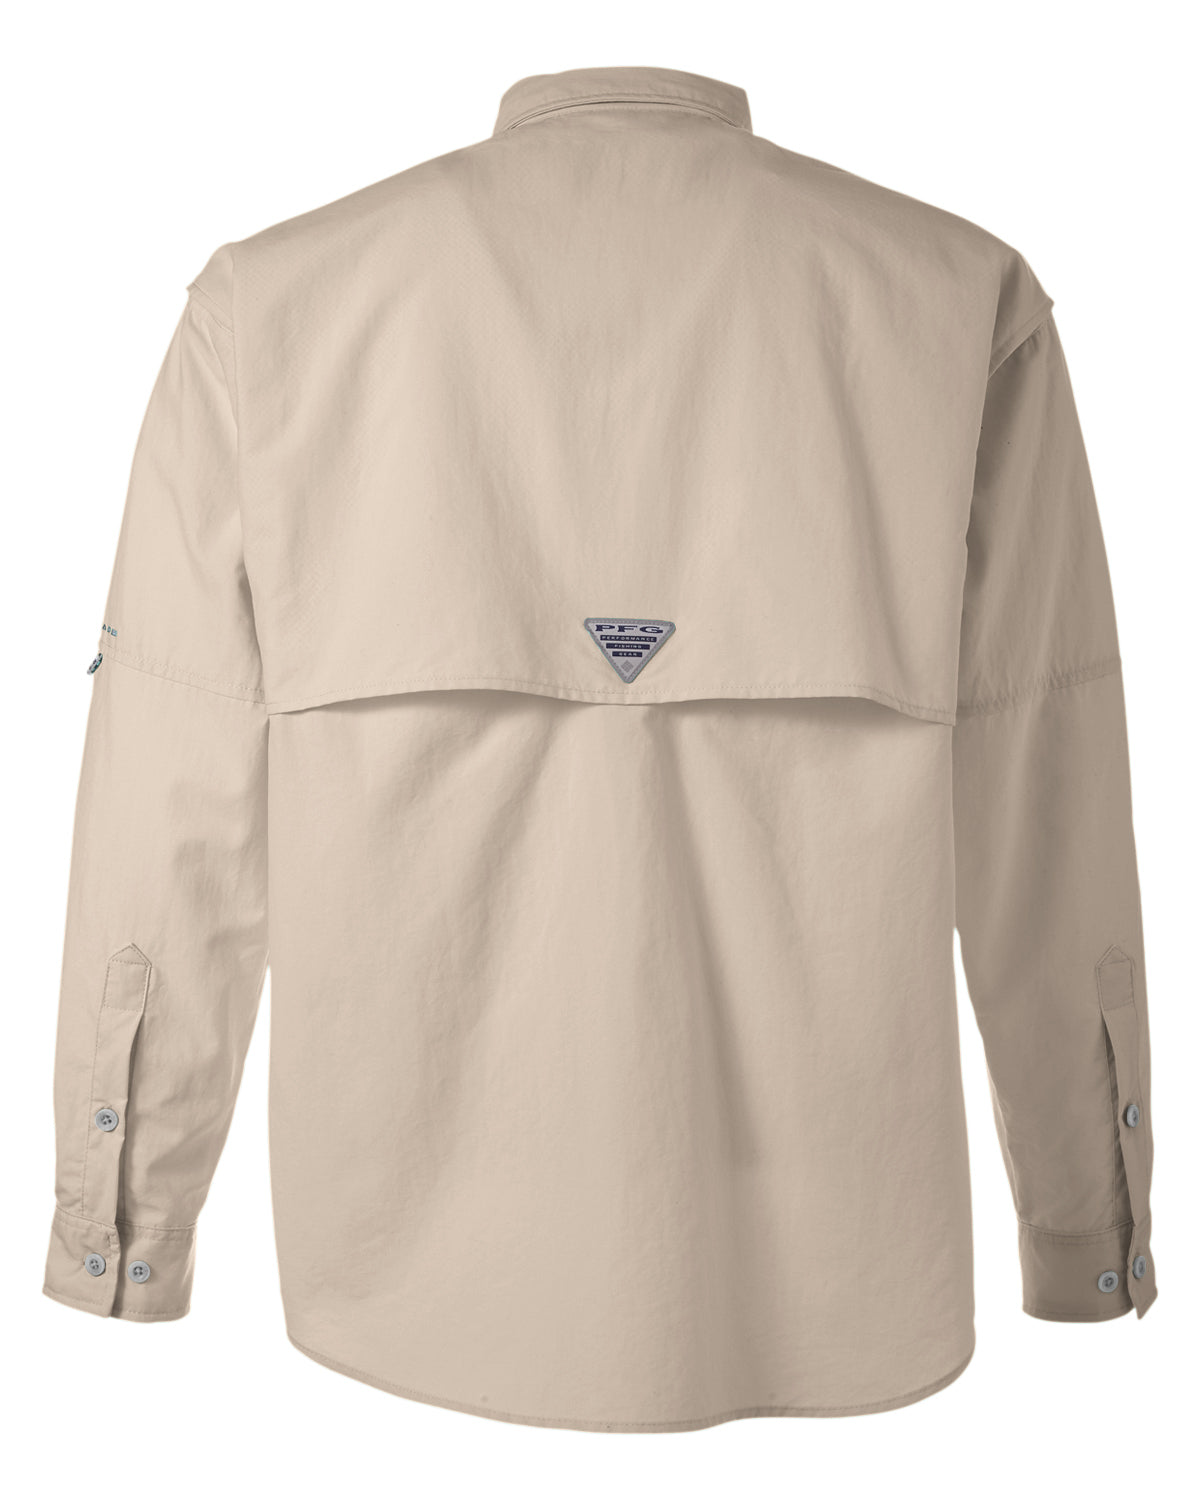 Columbia PFG Bahama II Long Sleeve Shirt White XXL - American